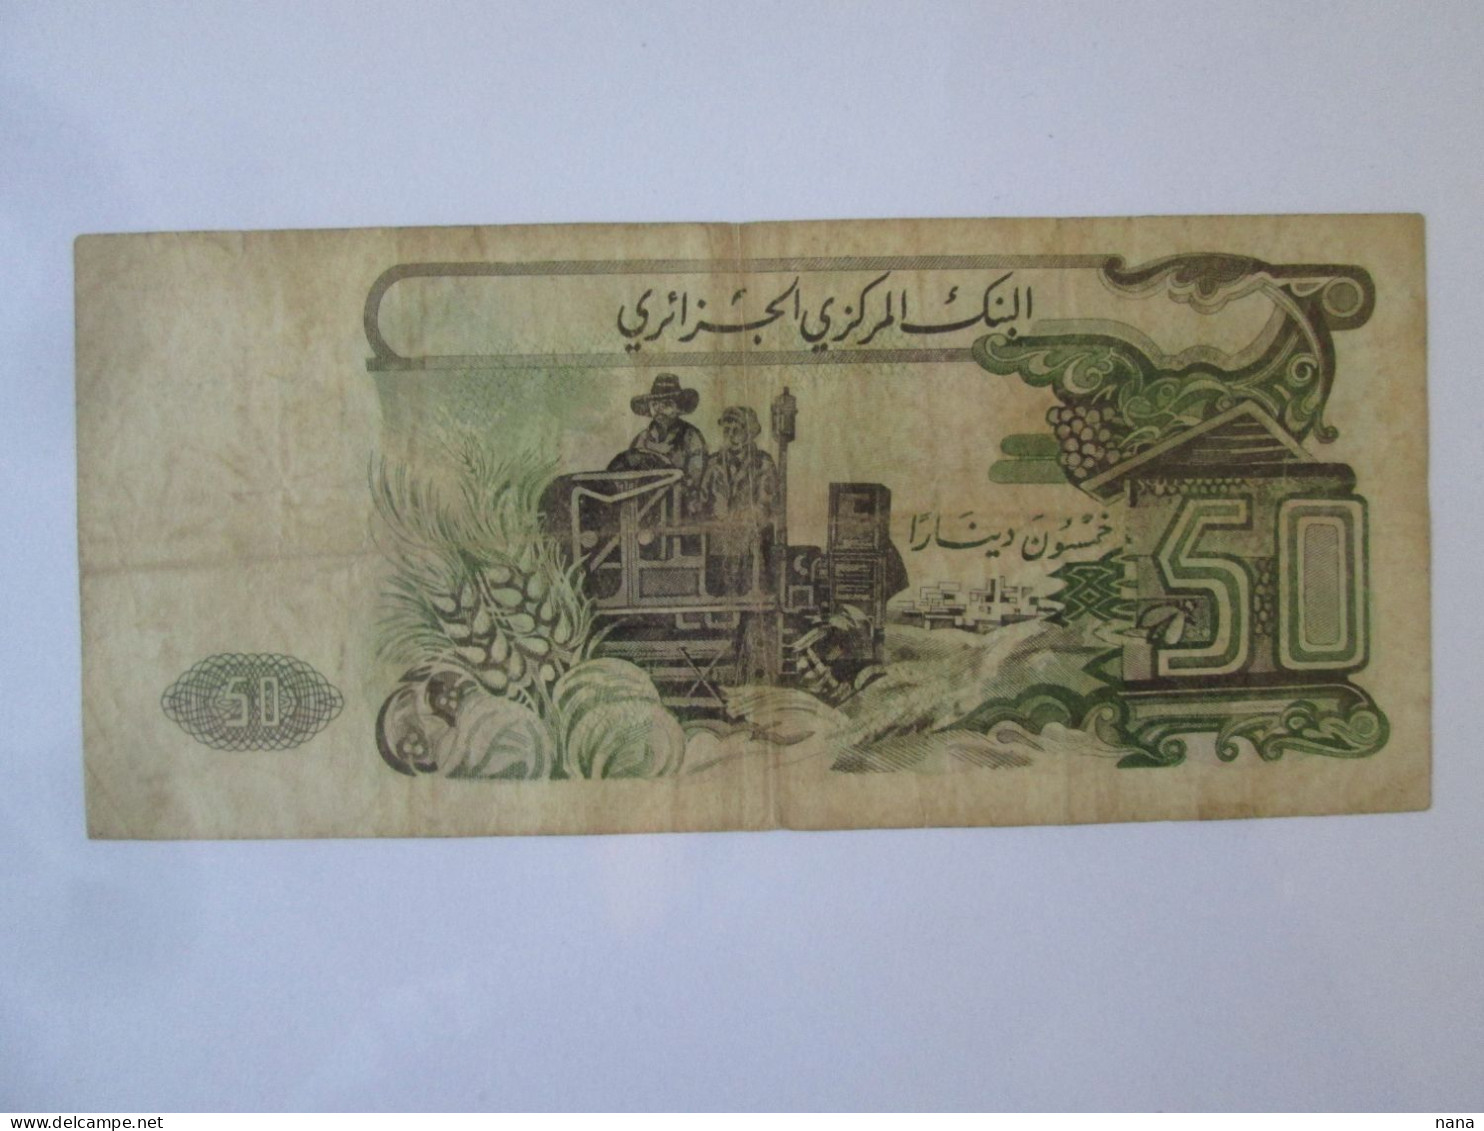 Algeria 50 Dinars 1977 Banknote,see Pictures - Algeria